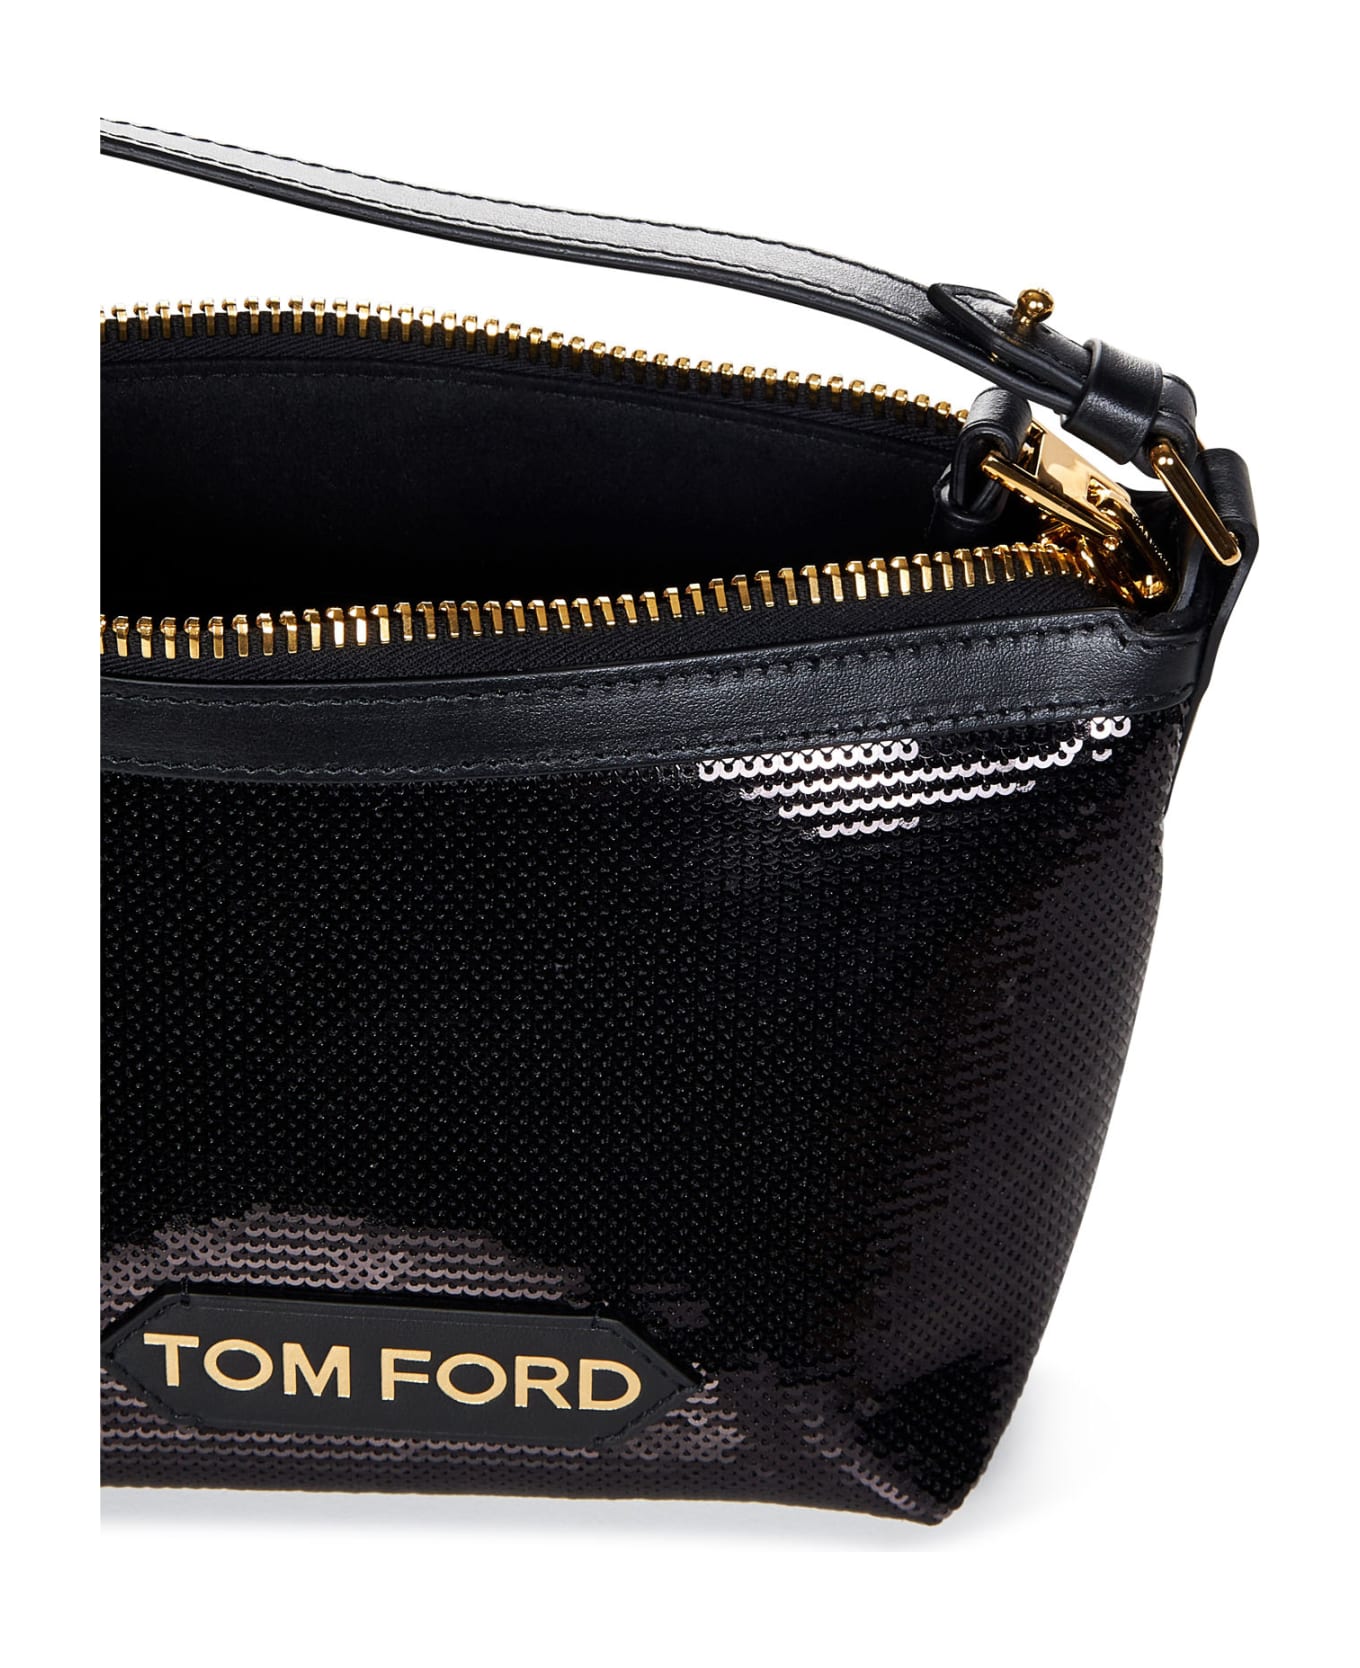 Tom Ford Label Small Handbag - Black